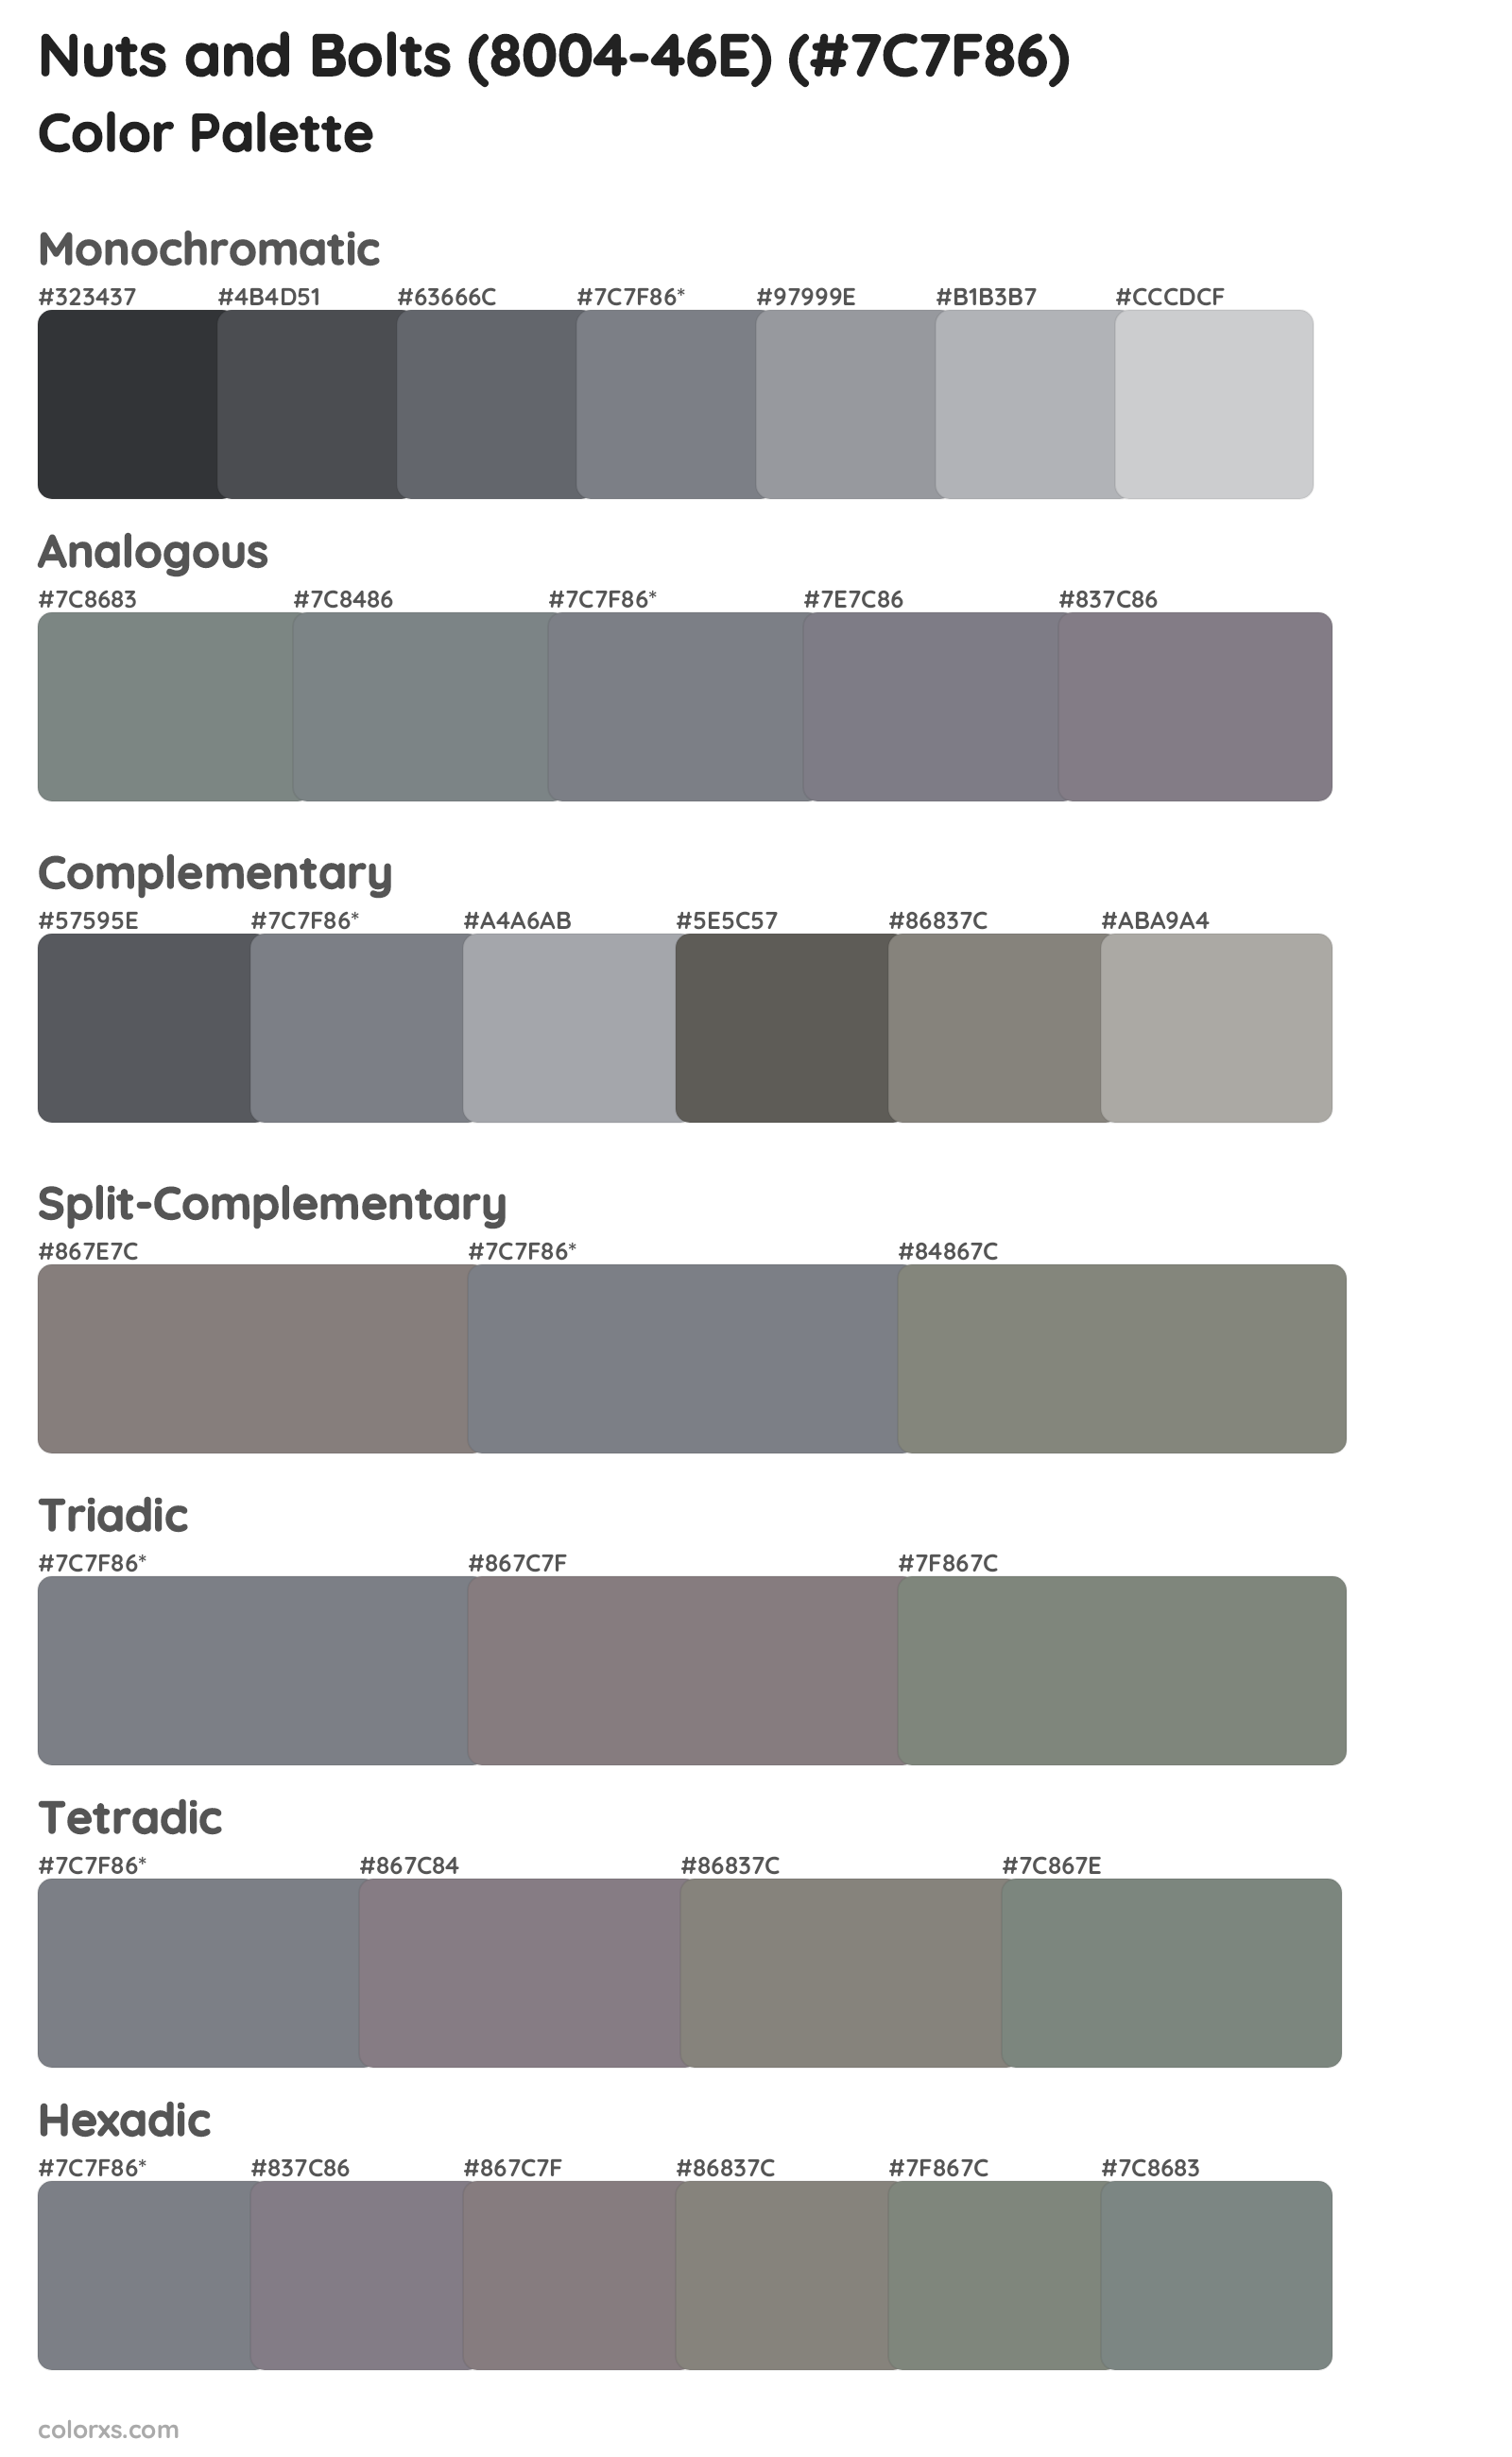 Nuts and Bolts (8004-46E) Color Scheme Palettes